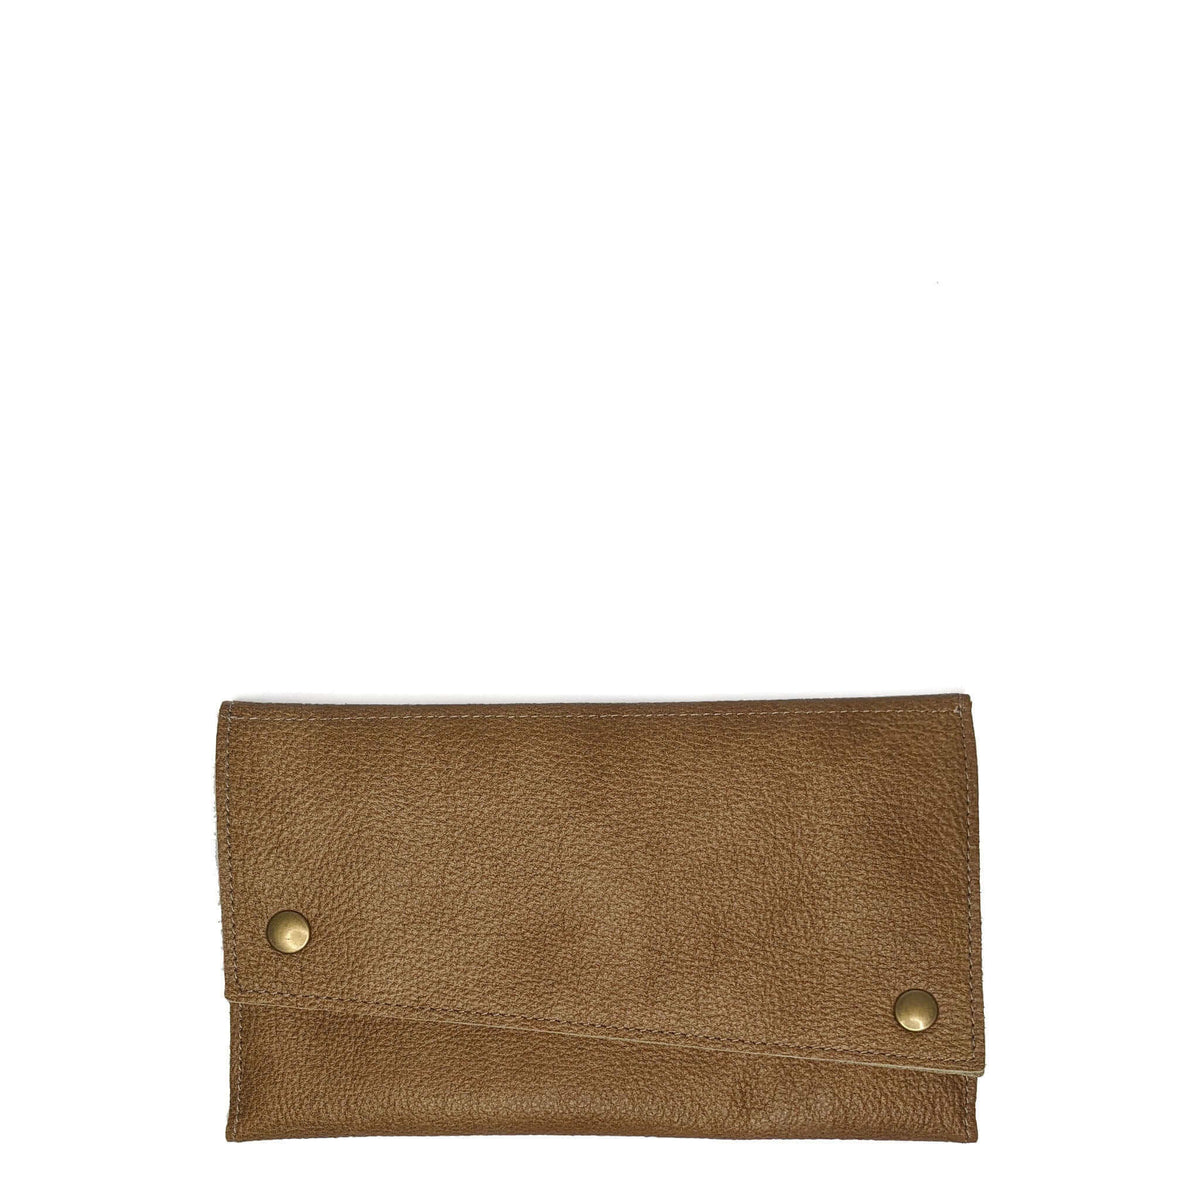 Leather Tri-fold Wallet - Golden Tan - Brynn Capella, leather accessories, usa